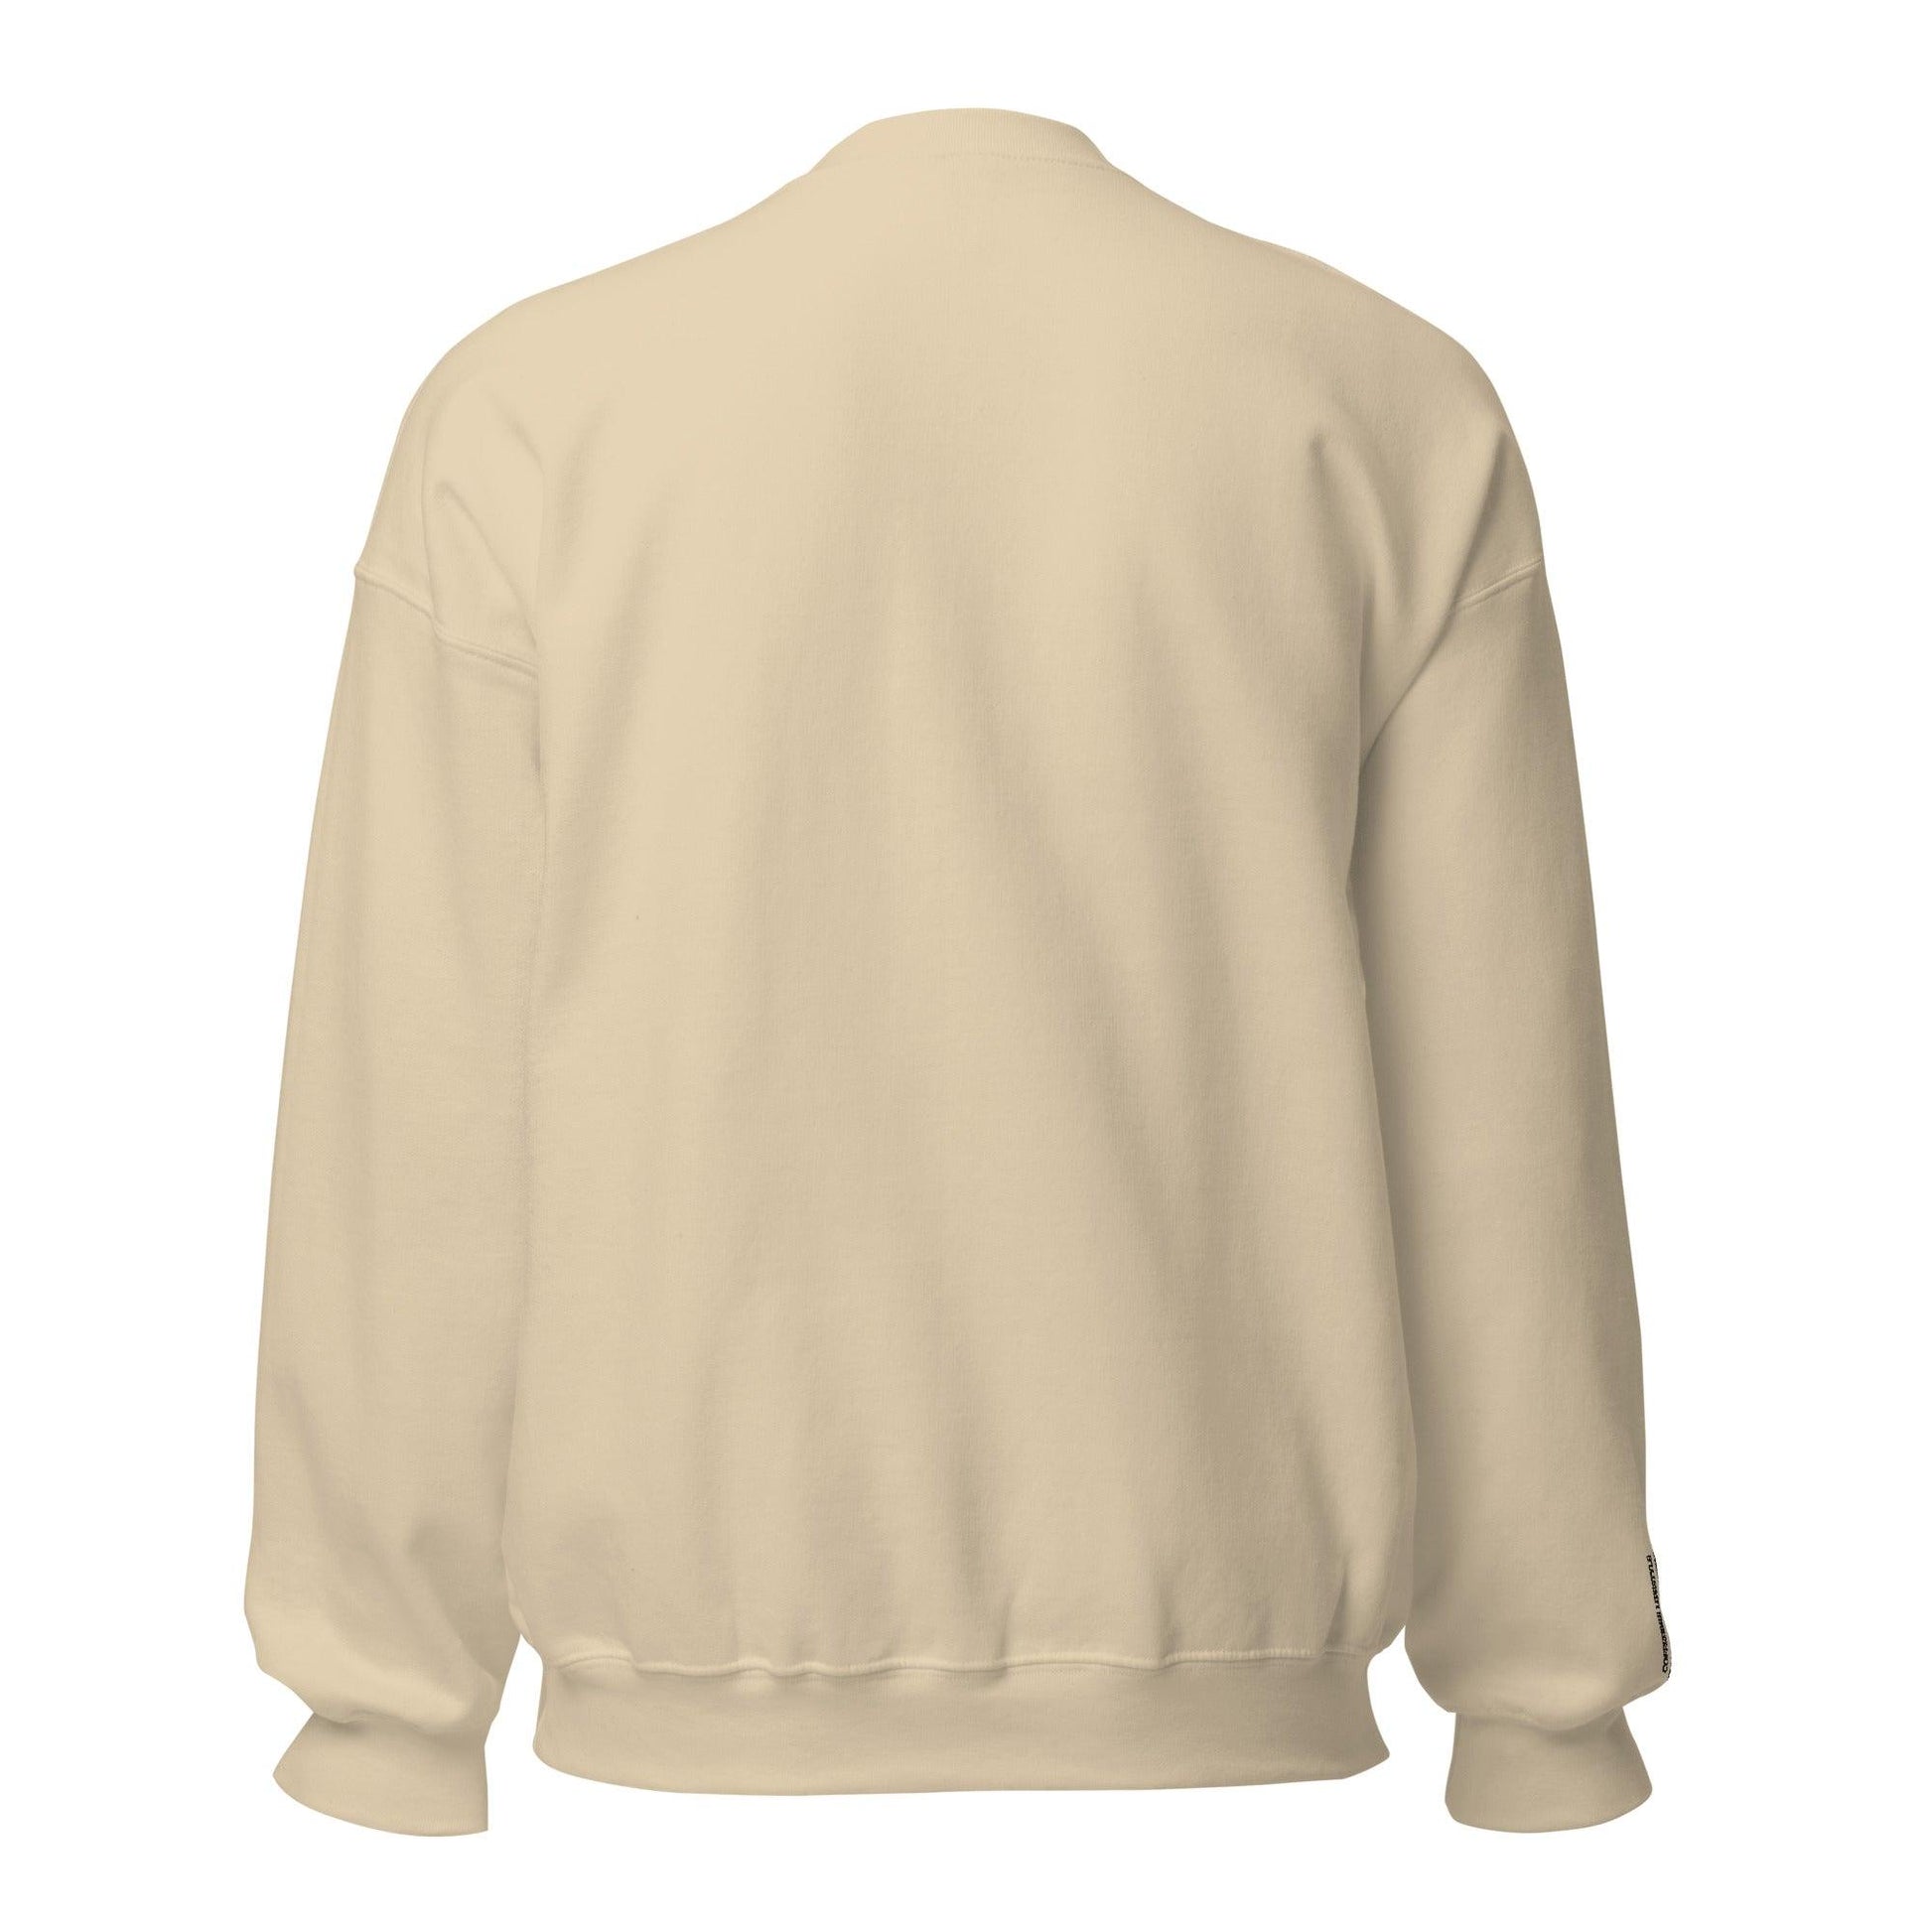 Trendy Unisex Embroidery Sweatshirt - COFFEEBRE